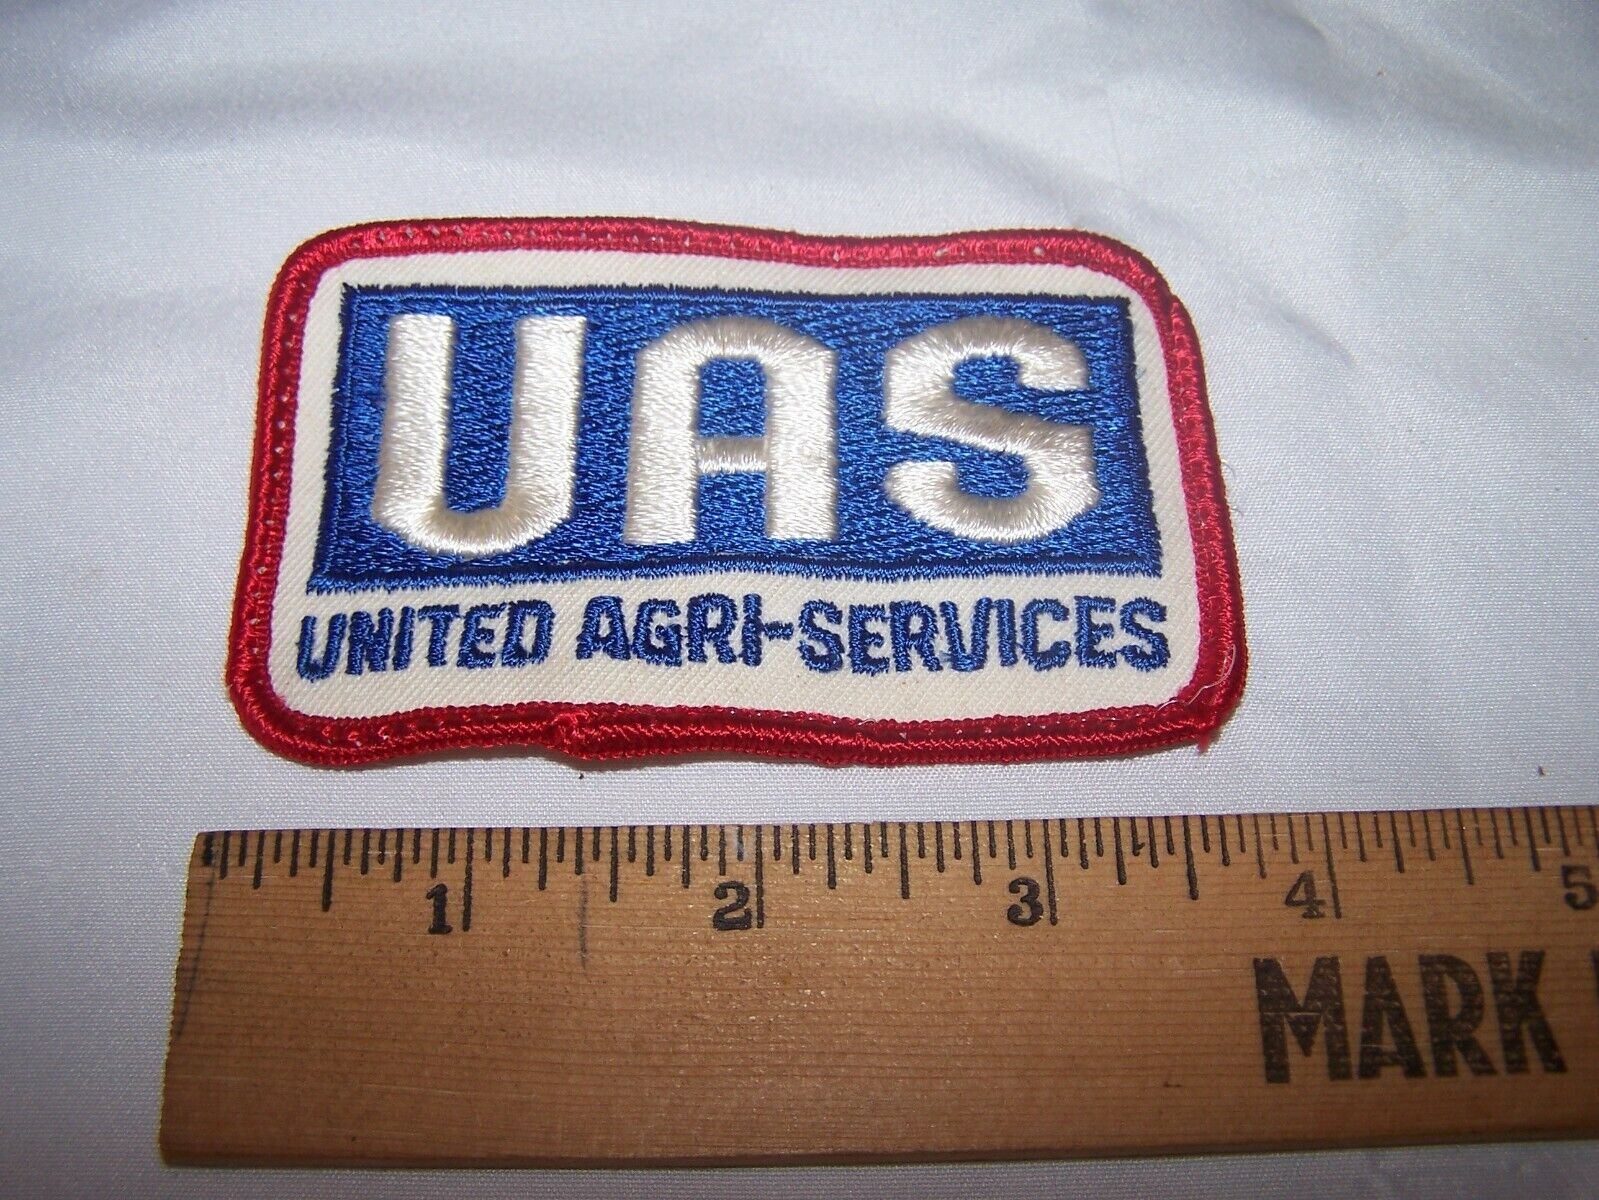 Vintage UAS UNITED AGRI-SERVICES Patch